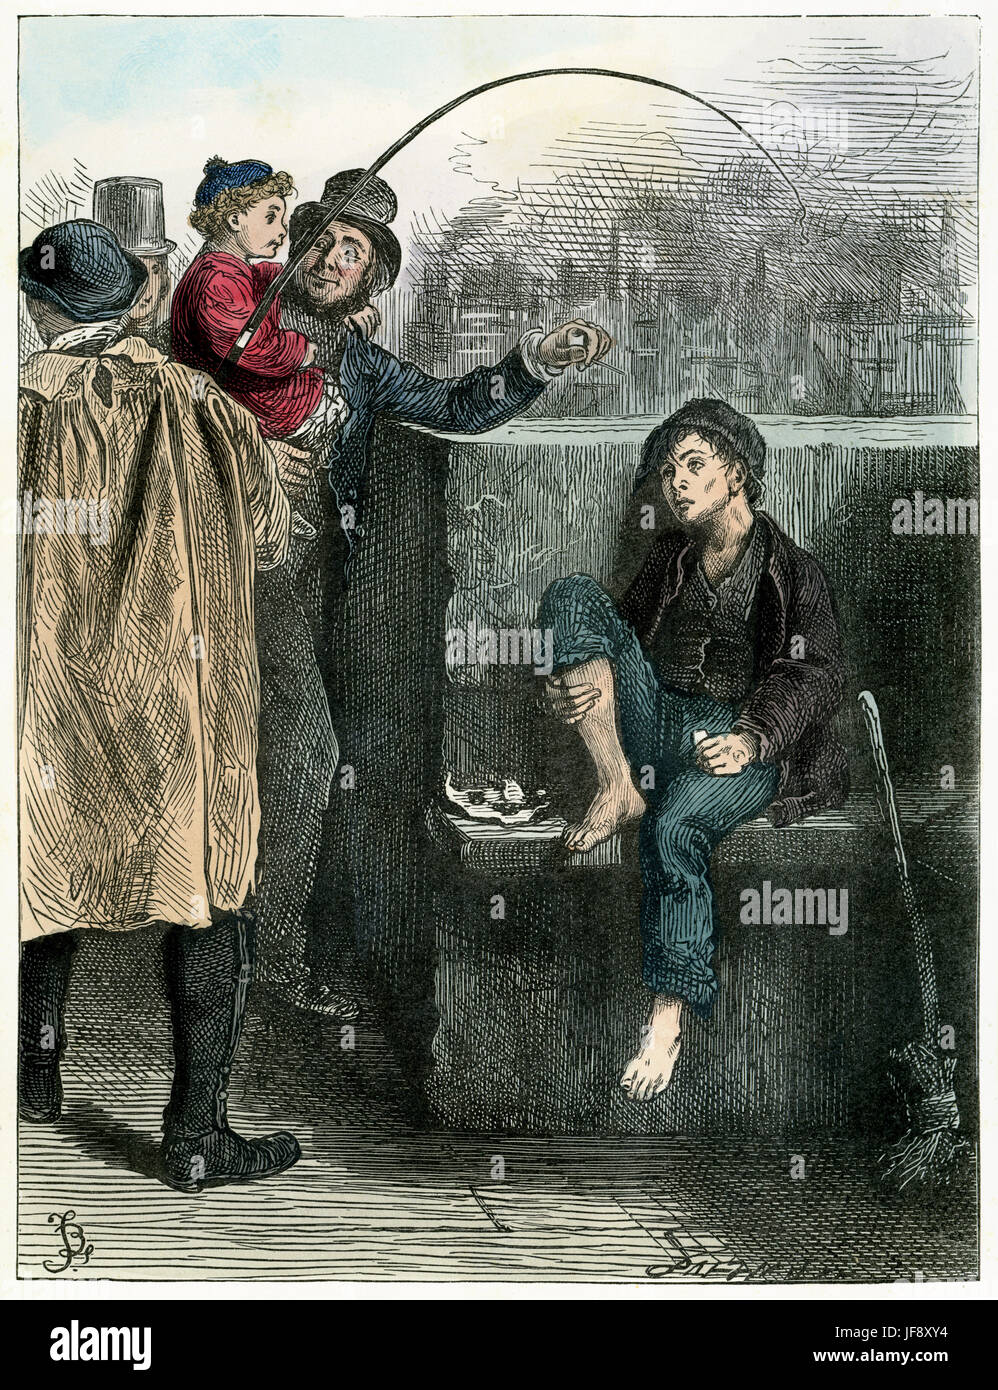 Jo dans Bleak House, roman de Charles Dickens (7 février 1812 - 9 juin 1870). Illustration par Fred Barnard (16 mai 1846 - 28 septembre 1896) Banque D'Images